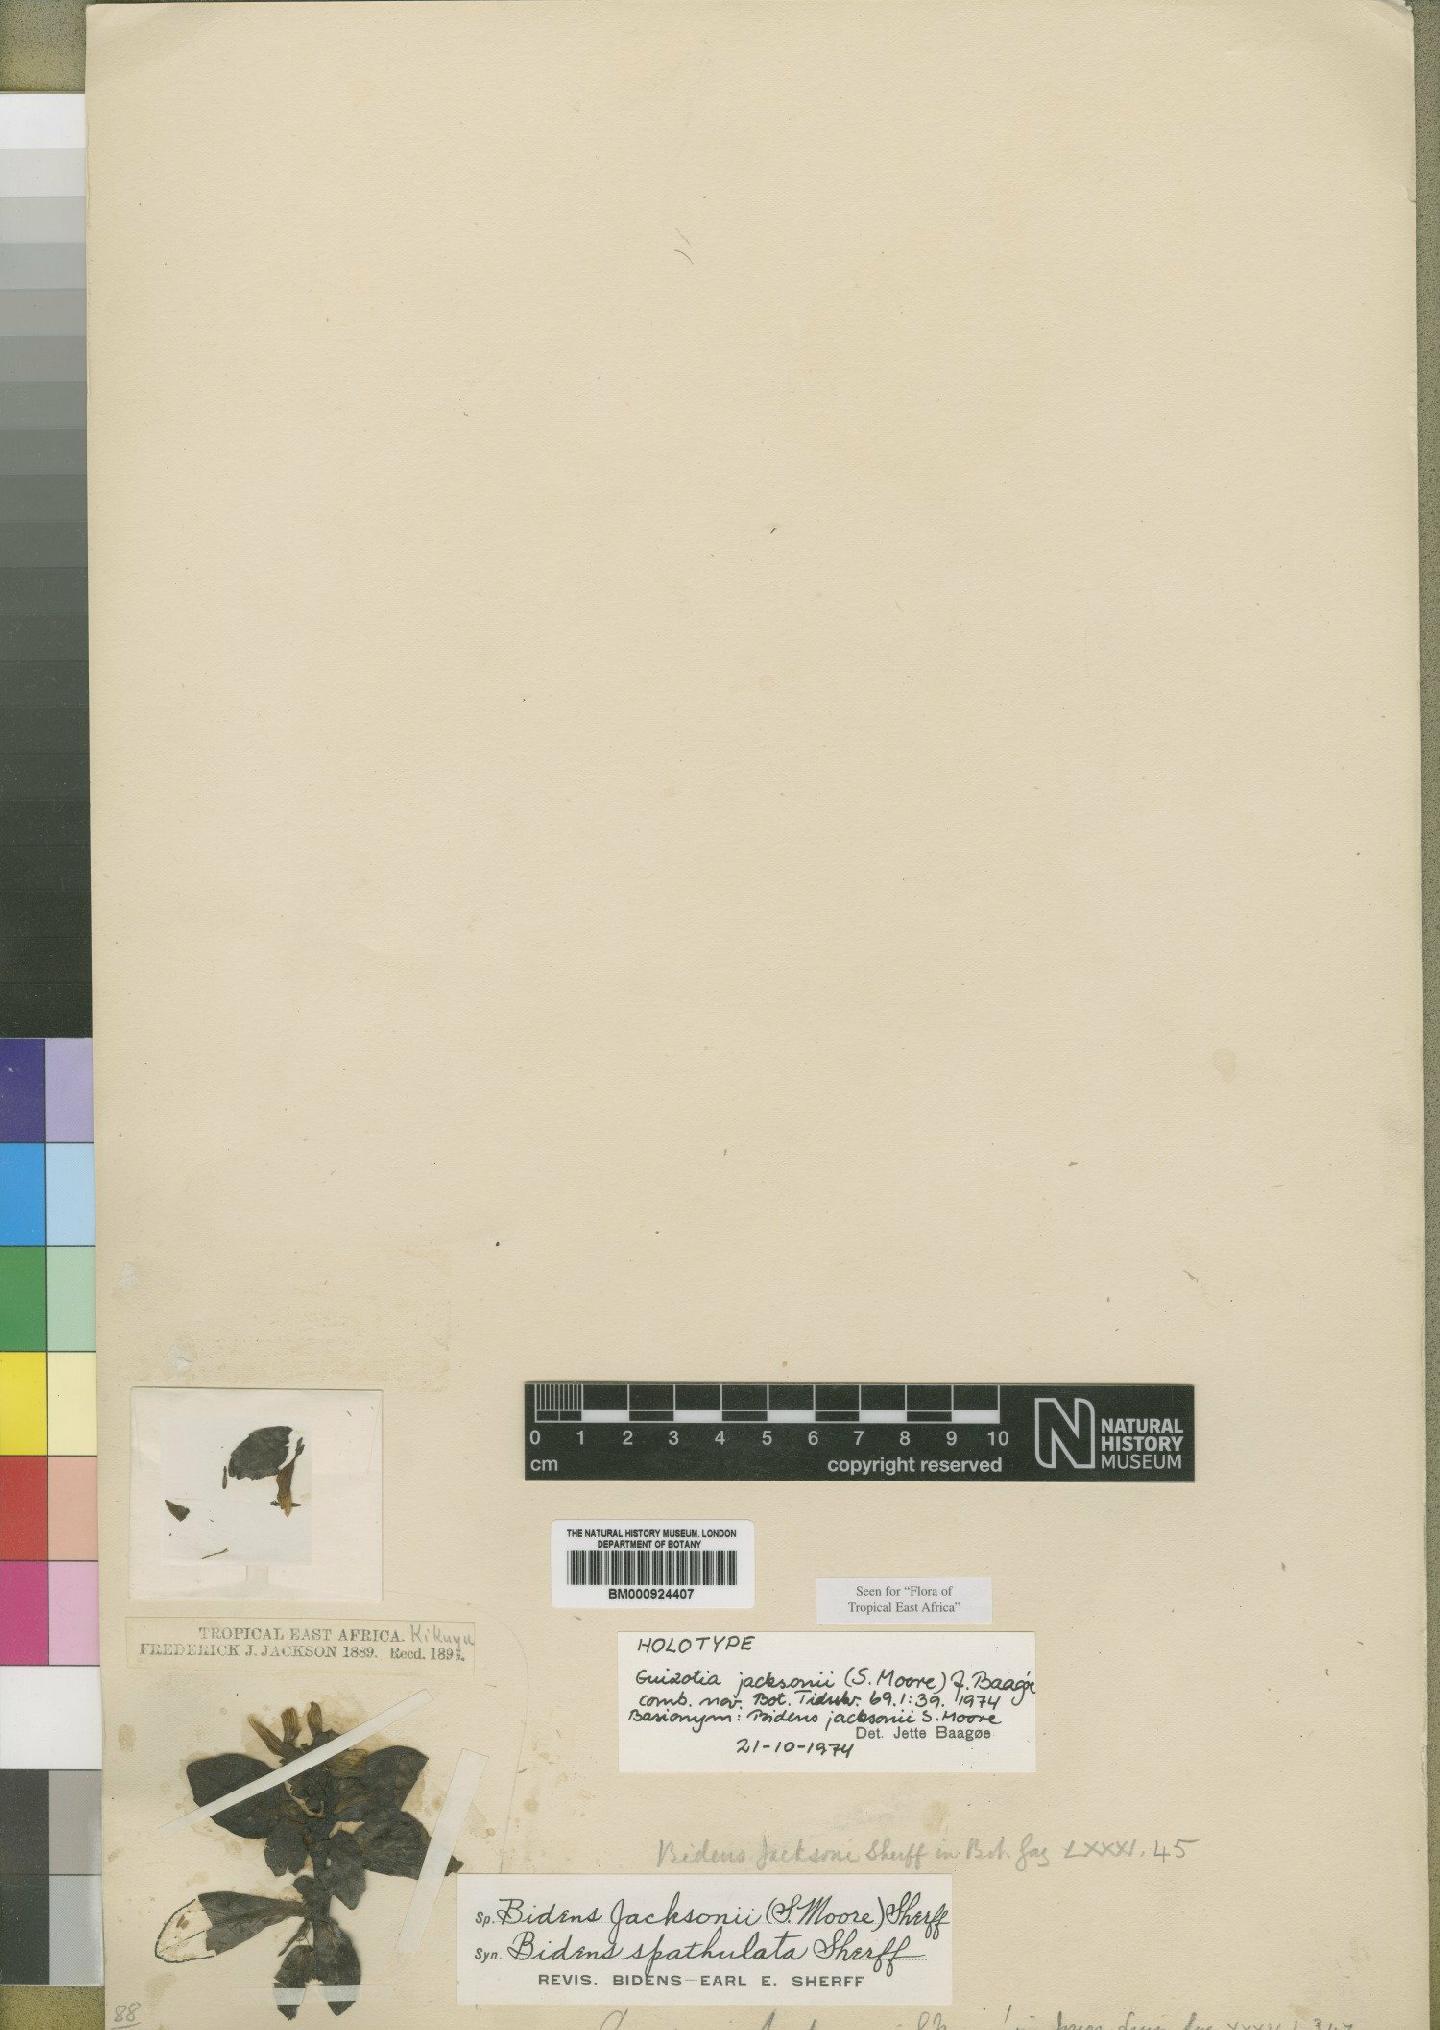 To NHMUK collection (Bidens jacksonii Moore; Holotype; NHMUK:ecatalogue:4529435)